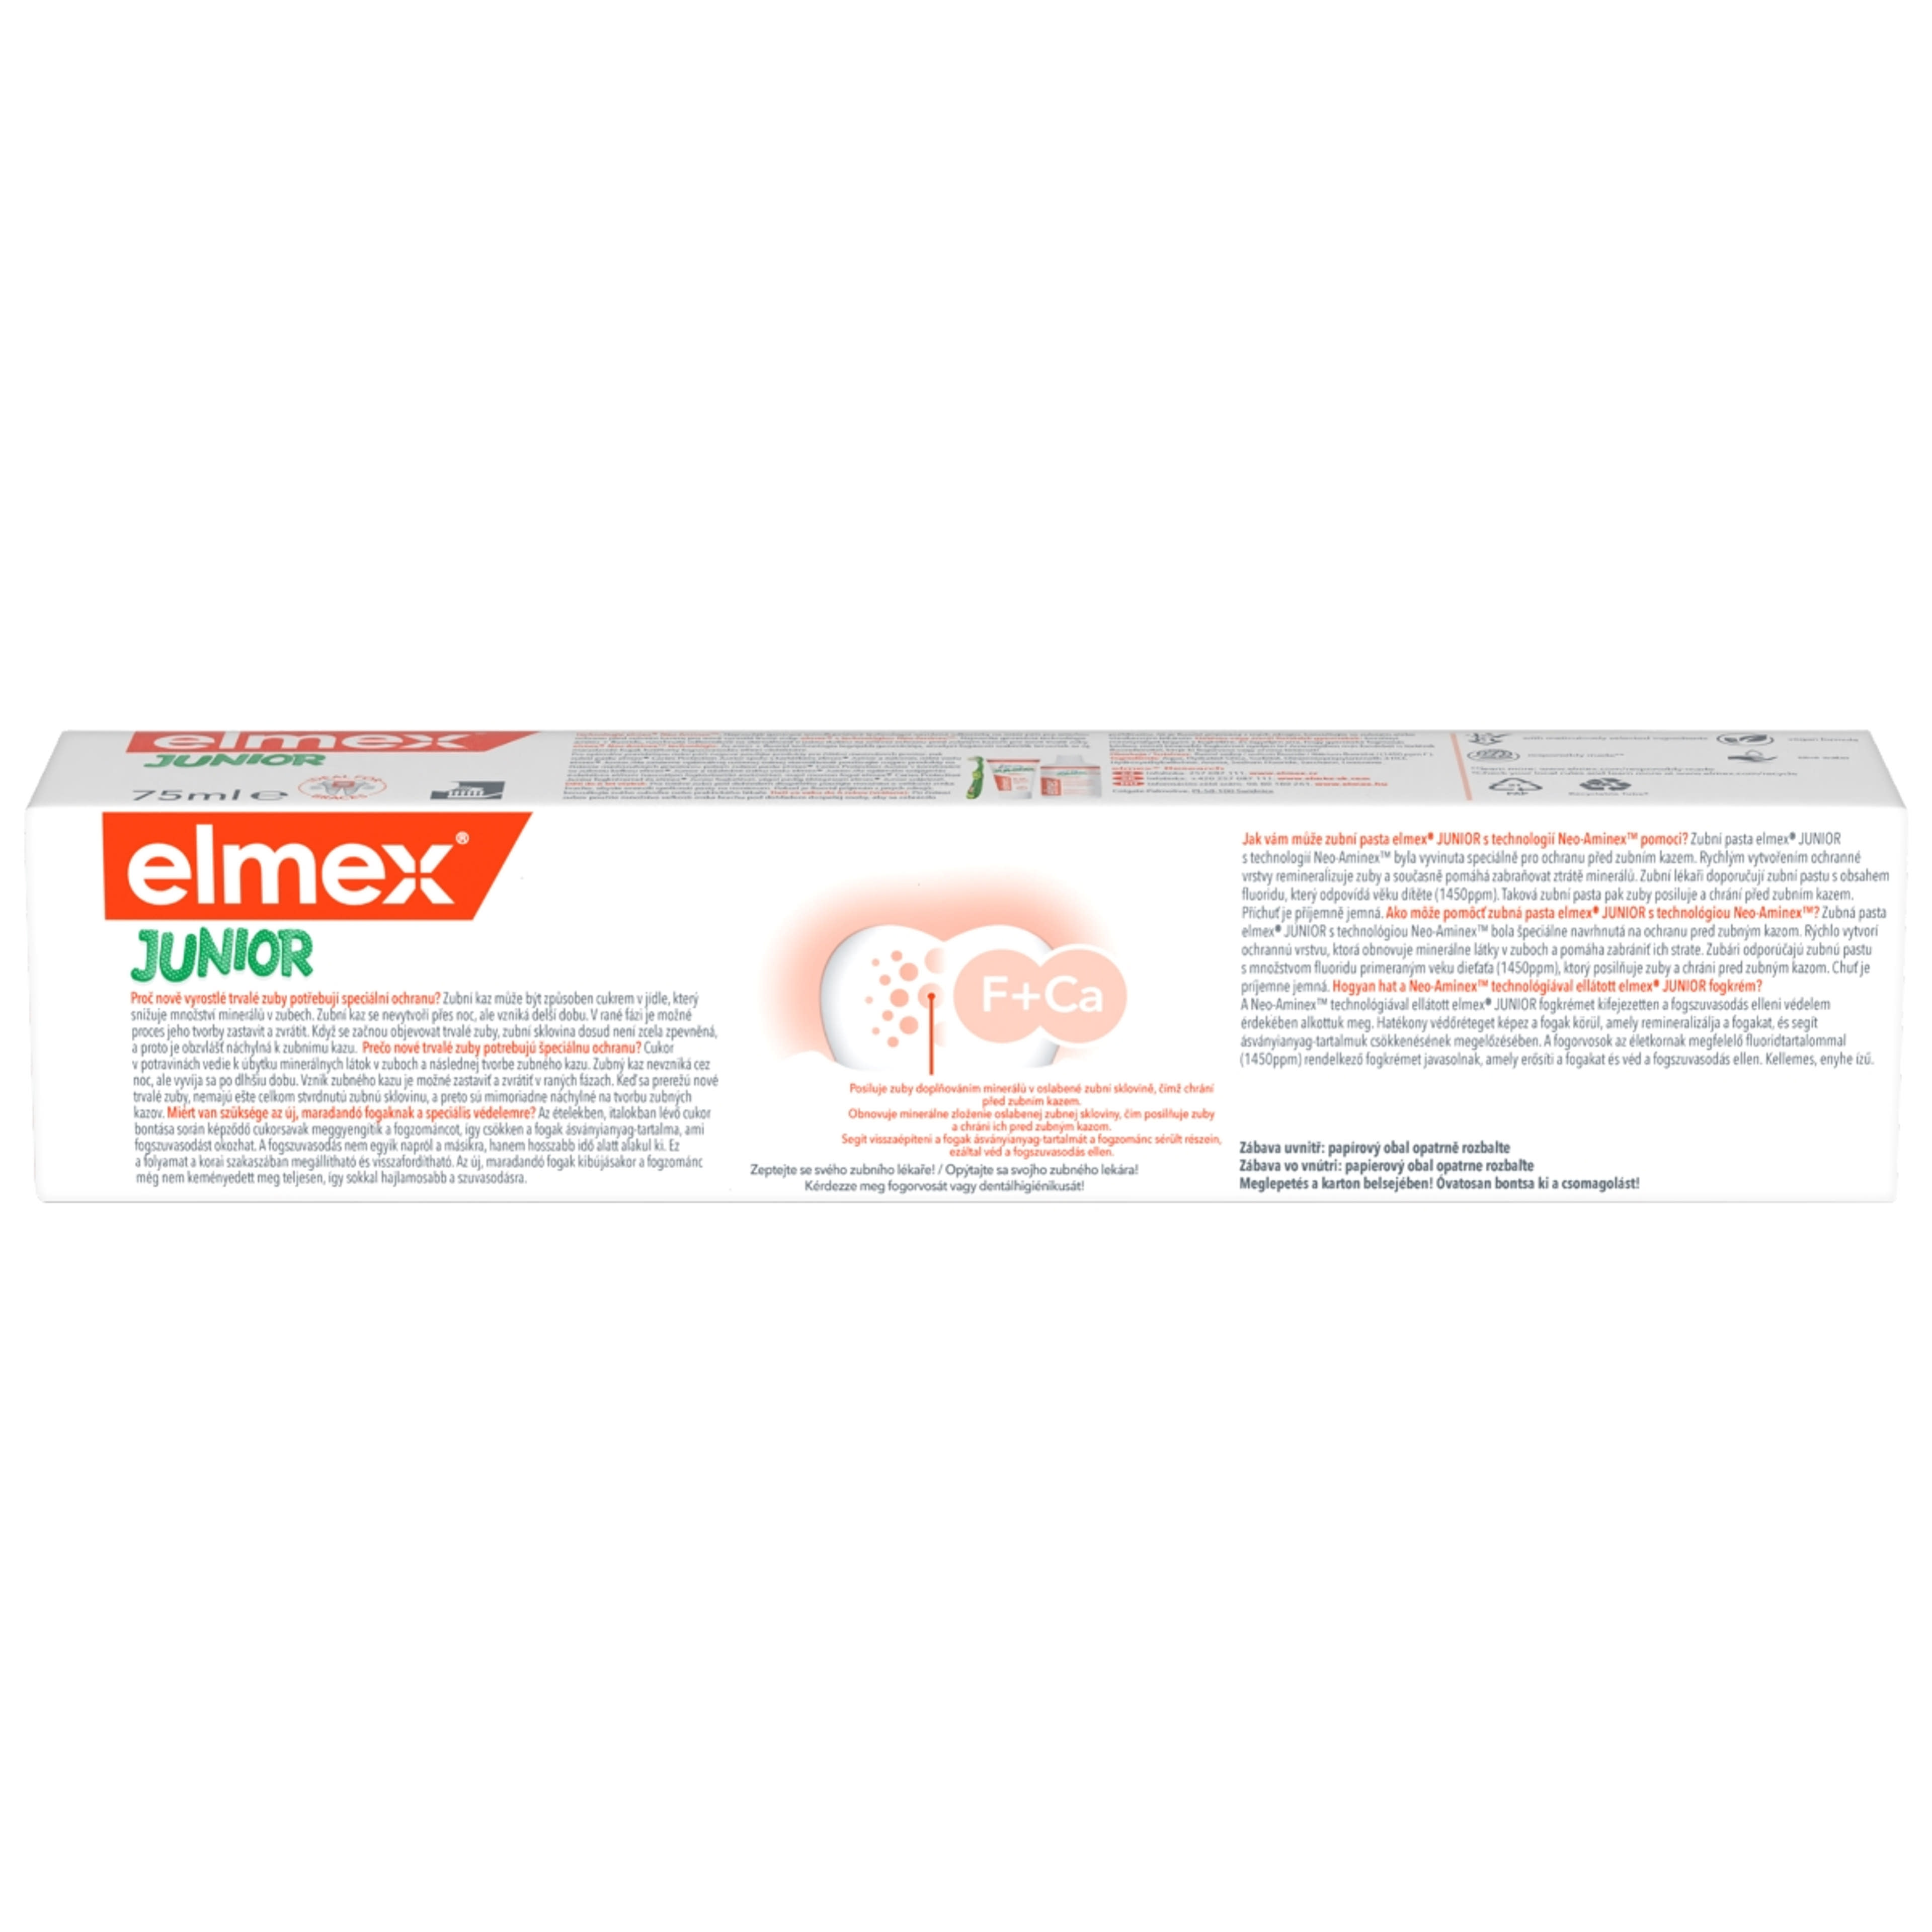 Elmex Junior fogkrém 6-12 éves korig - 75 ml-3